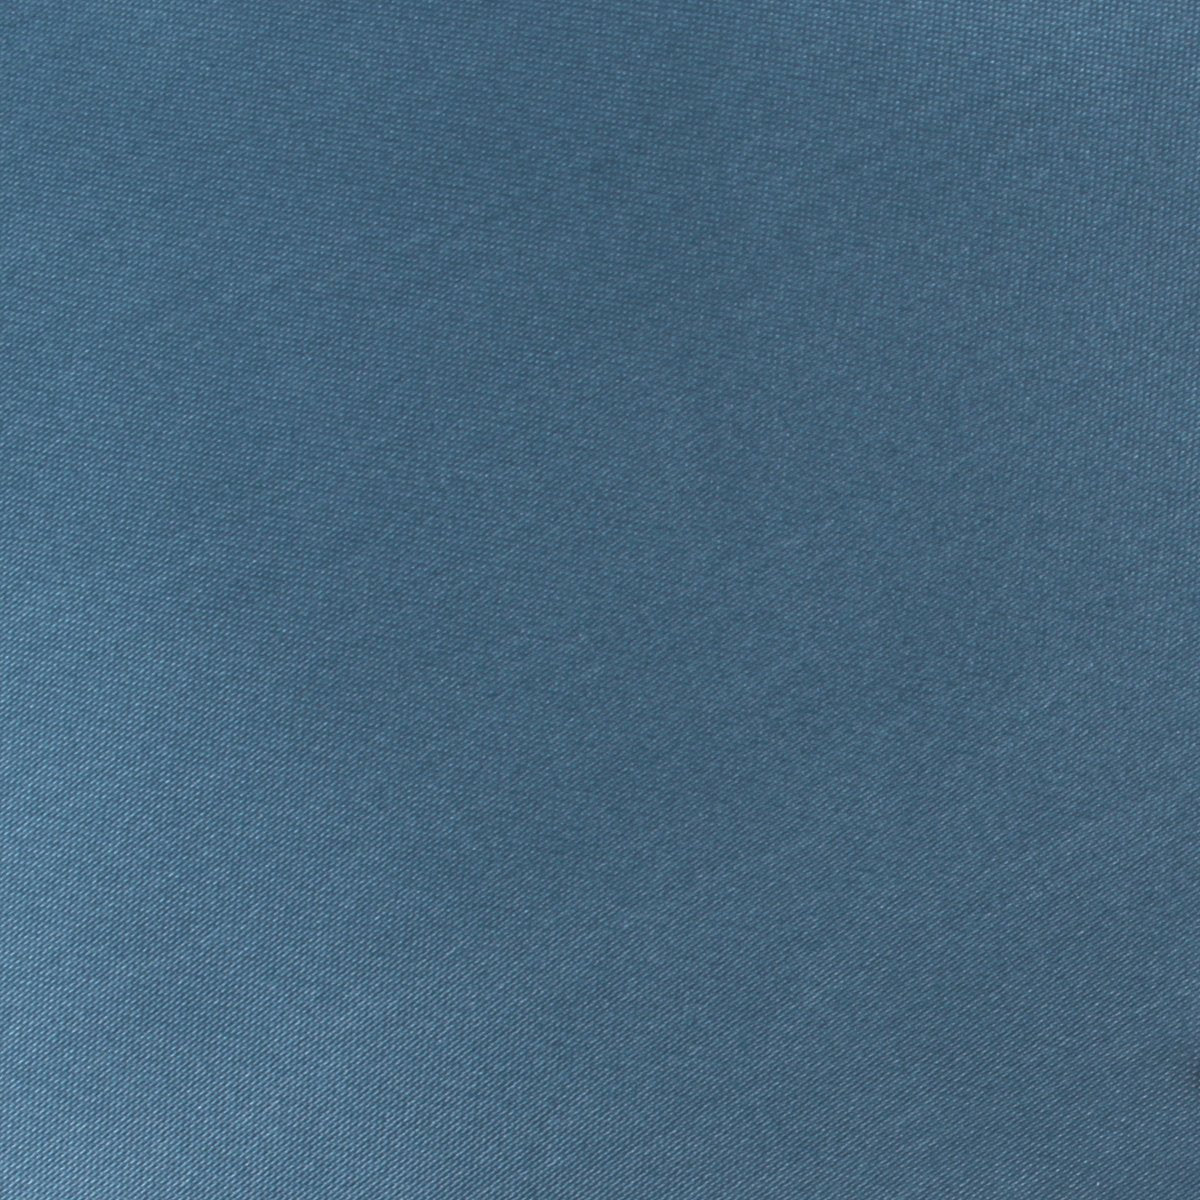 Coastal Blue Satin Necktie Fabric